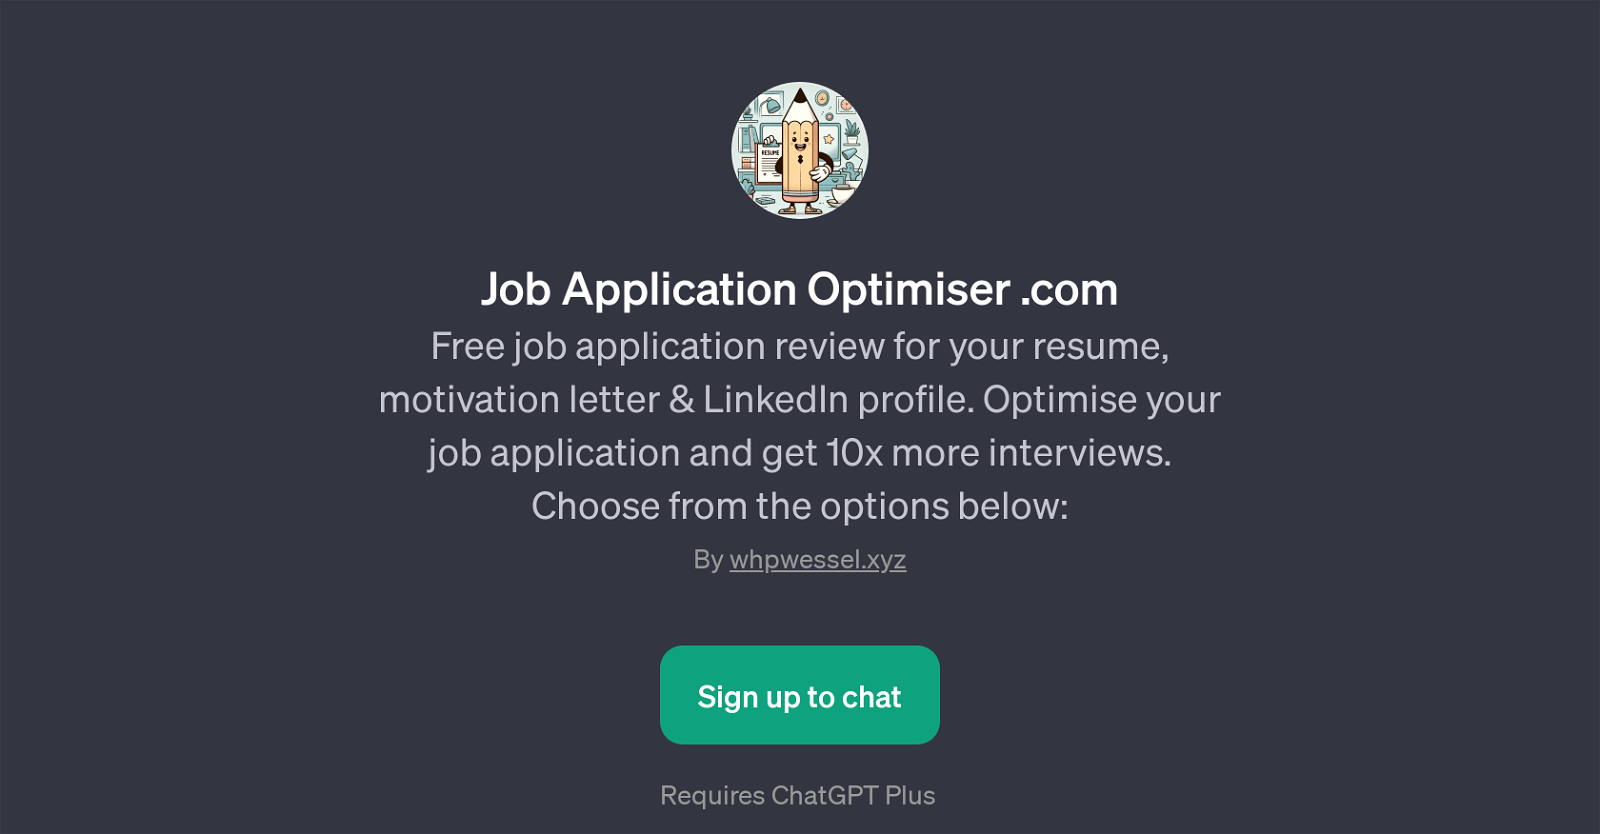 Job Application Optimiser website